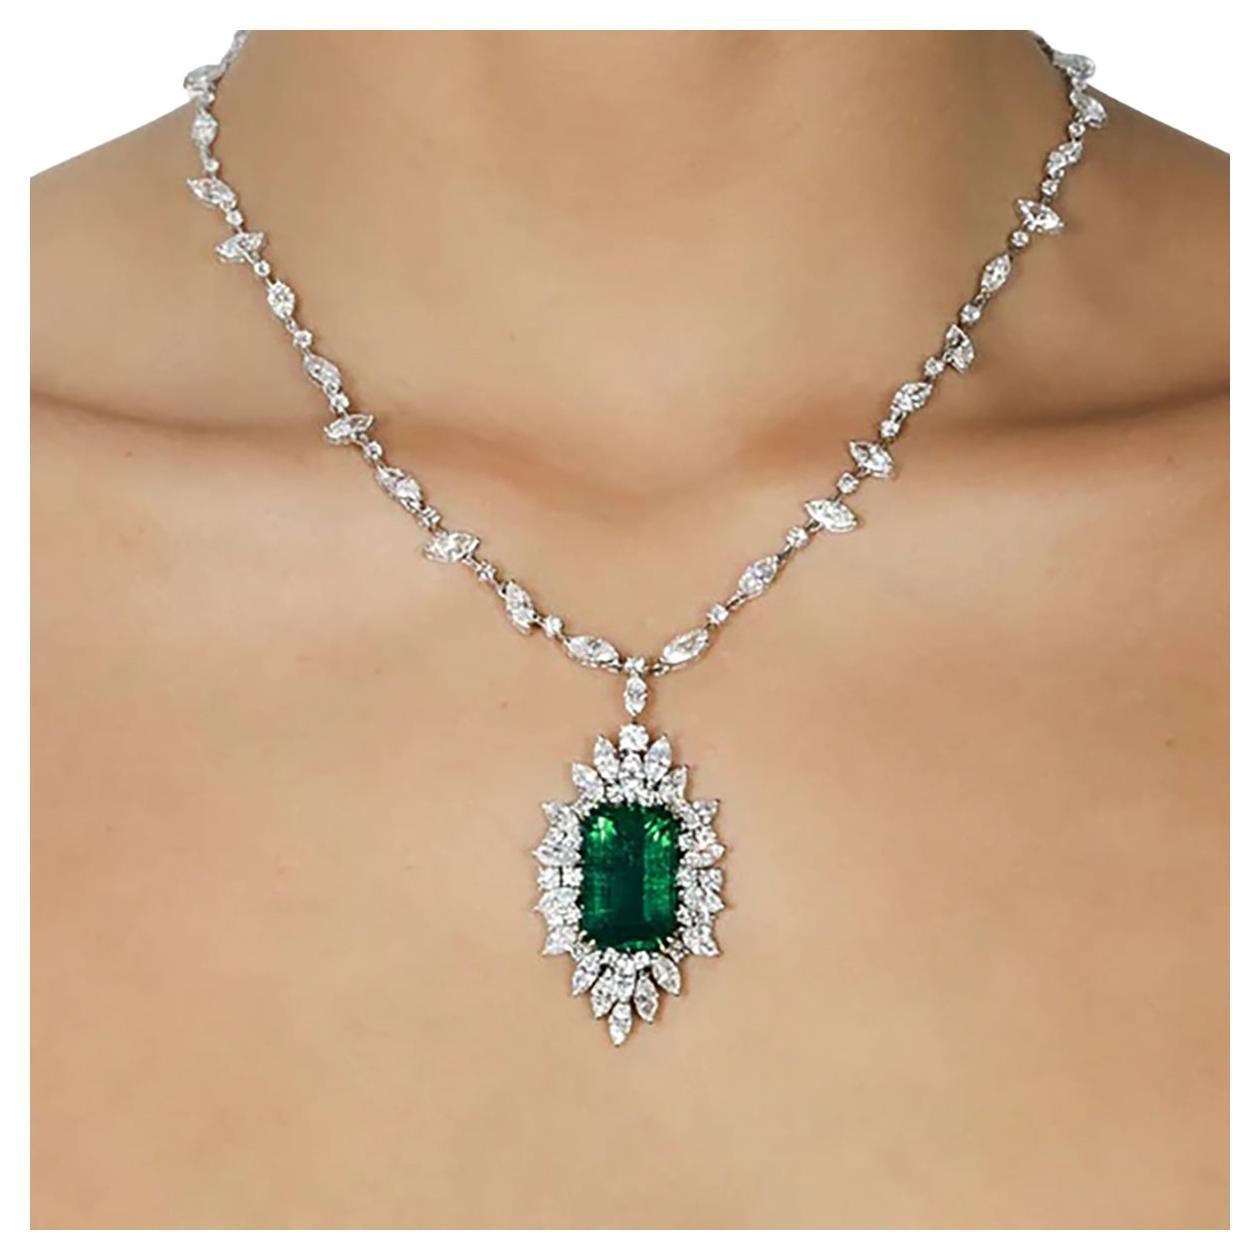 10.42 Carat Emerald Necklace For Sale